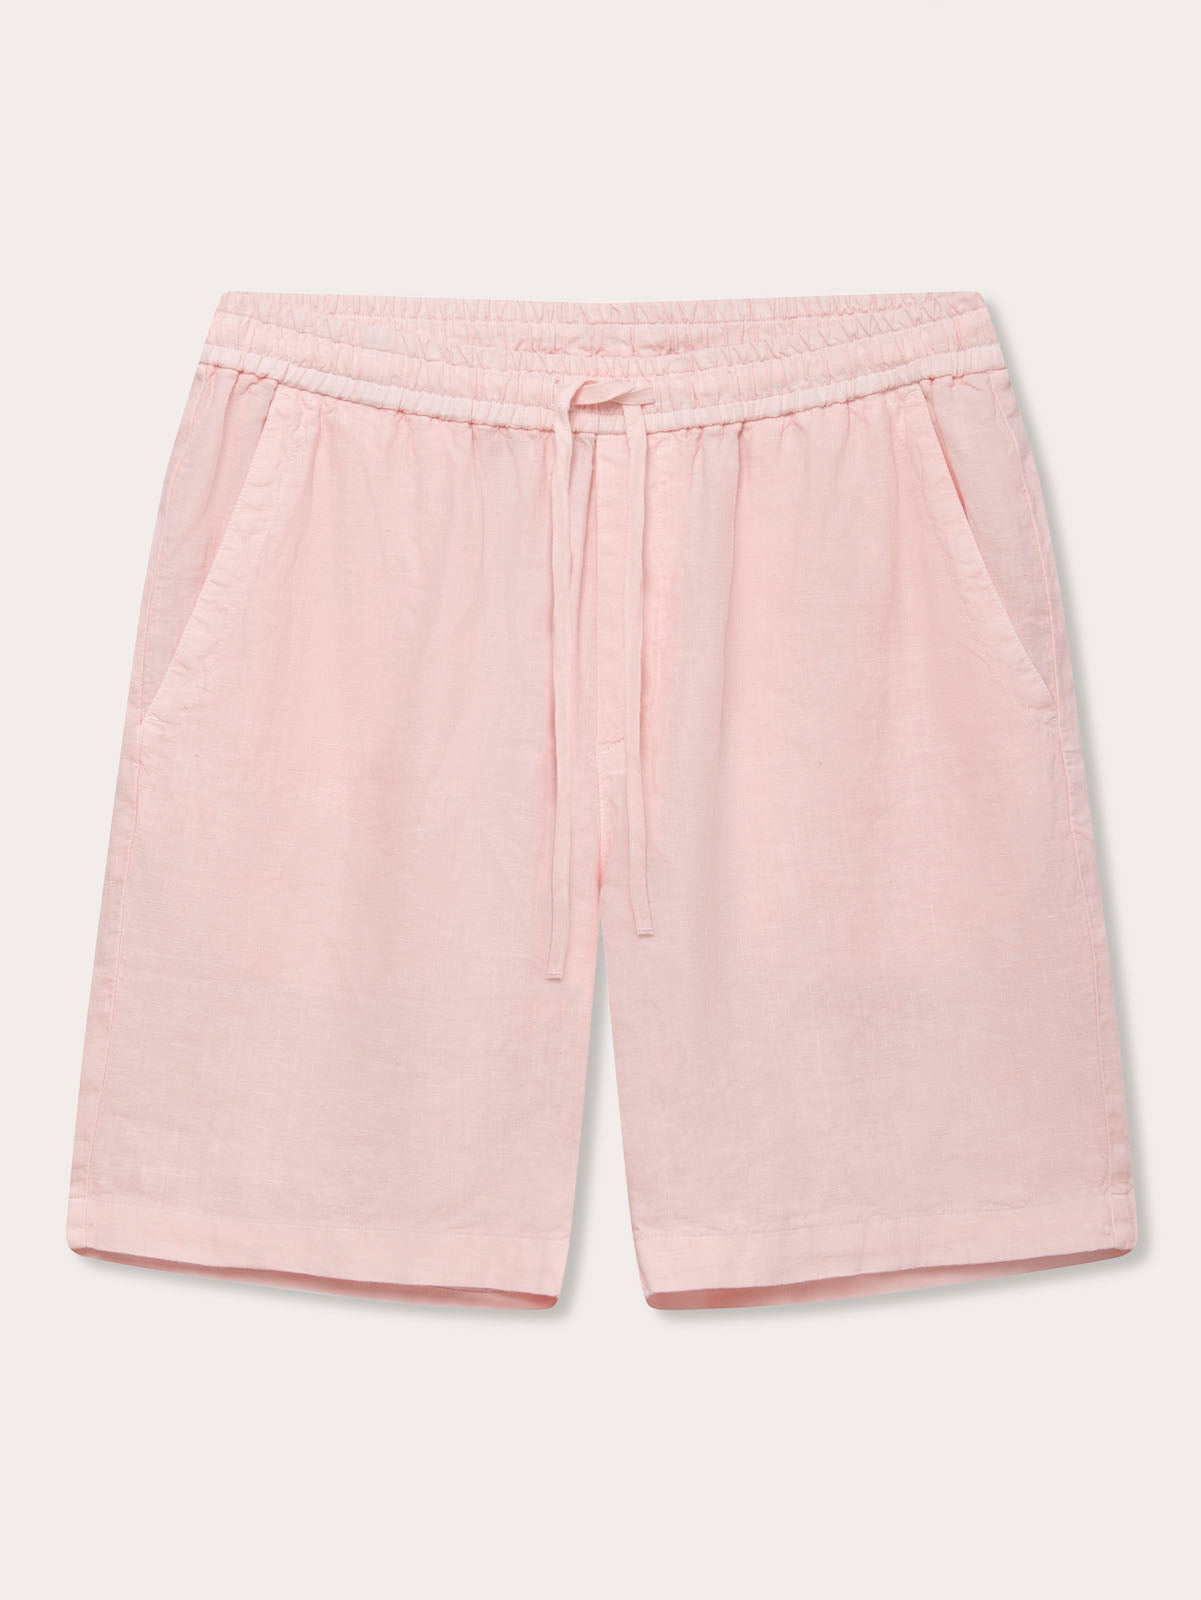 Men’s Pastel Pink Joulter Linen Shorts